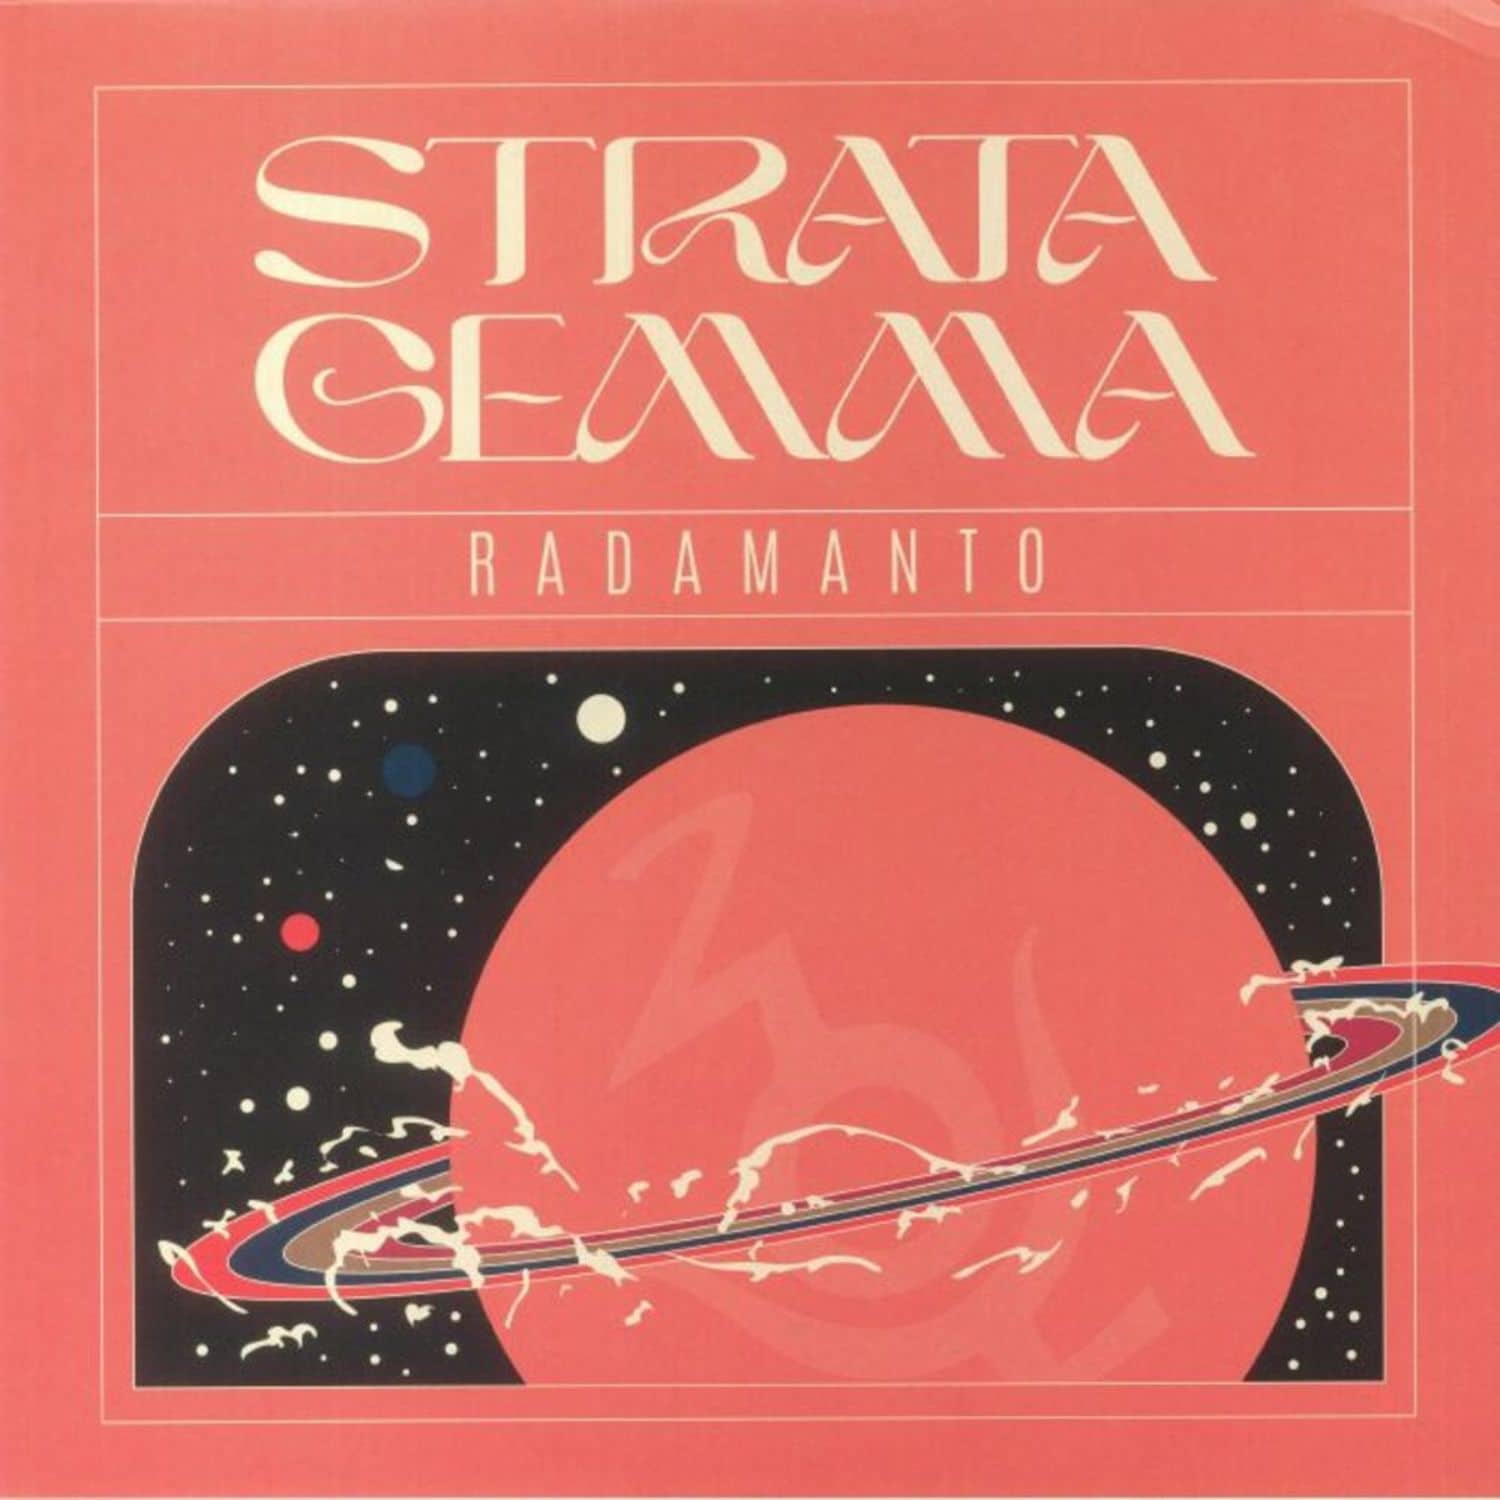 Strata-Gemma - RADAMANTO 